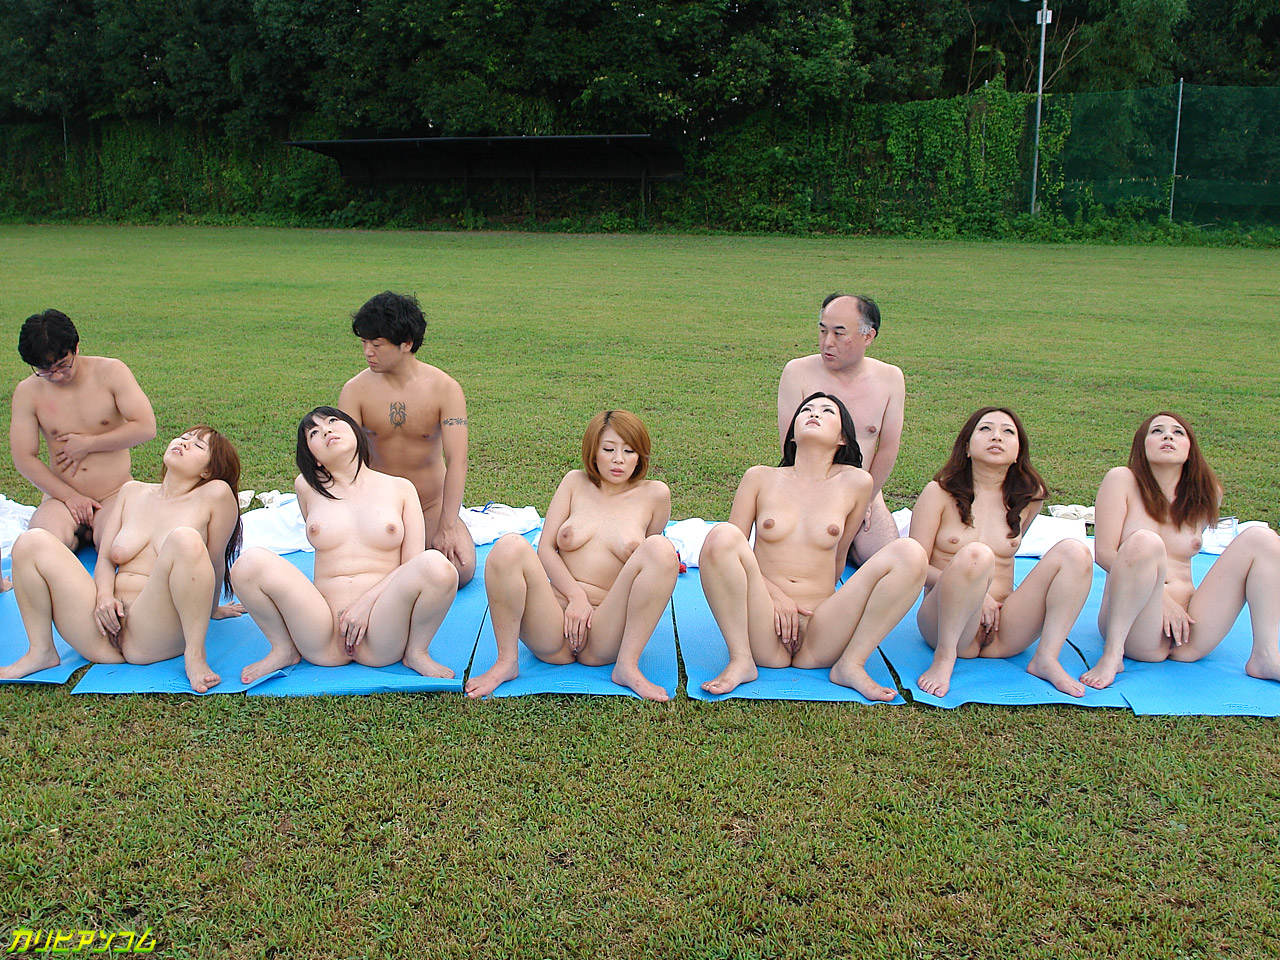 Kinky Asian girls tease with their asses and get rammed in an outdoor session 포르노 사진 #423605775 | Caribbeancom Pics, Ai, Ami, Eri, Kohaku, Maeshima, Makino, Miyazaki, Mizushima, Murase, Reira, Sawakita, Serikawa, Uta, Yuka, Yuma, Japanese, 모바일 포르노